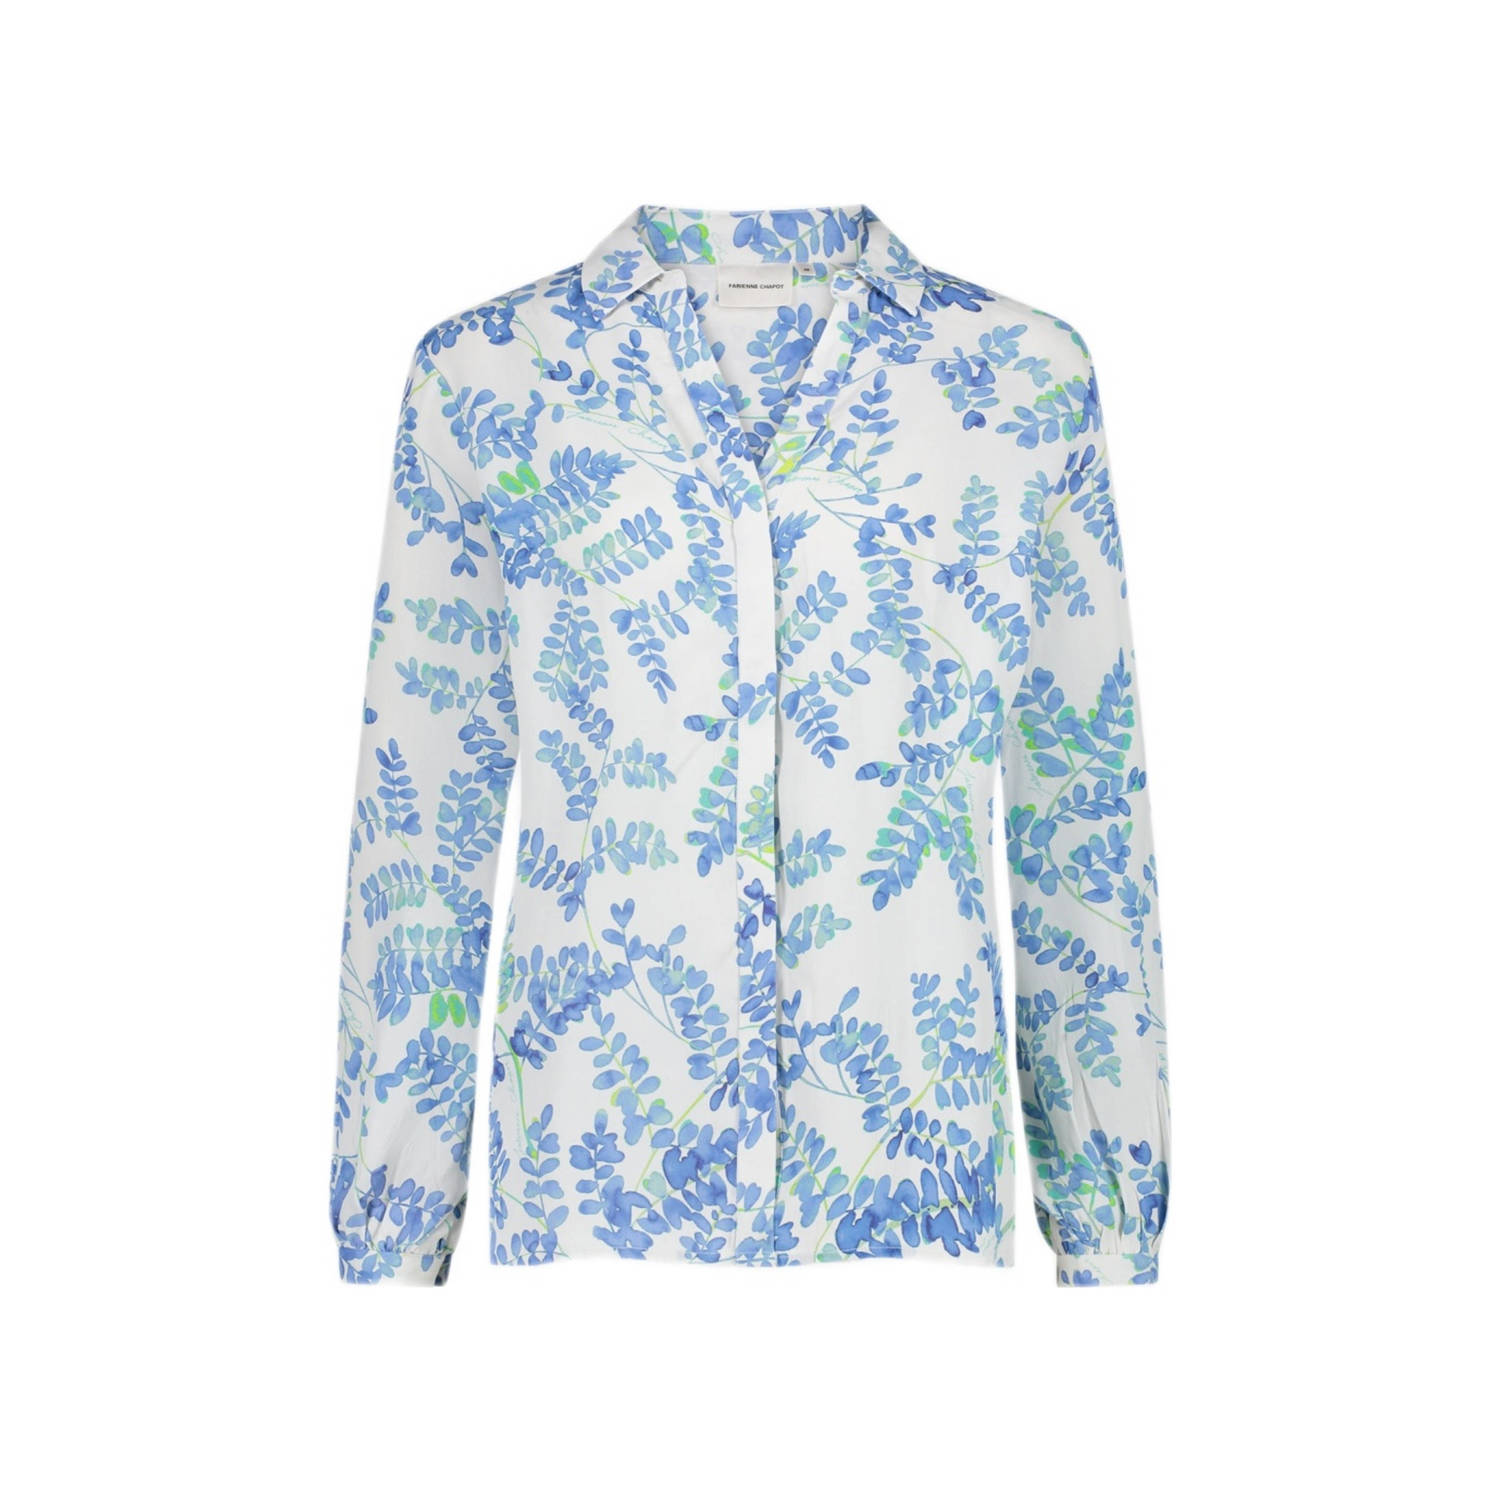 Fabienne Chapot blouse Liv met all over print blauw wit groen